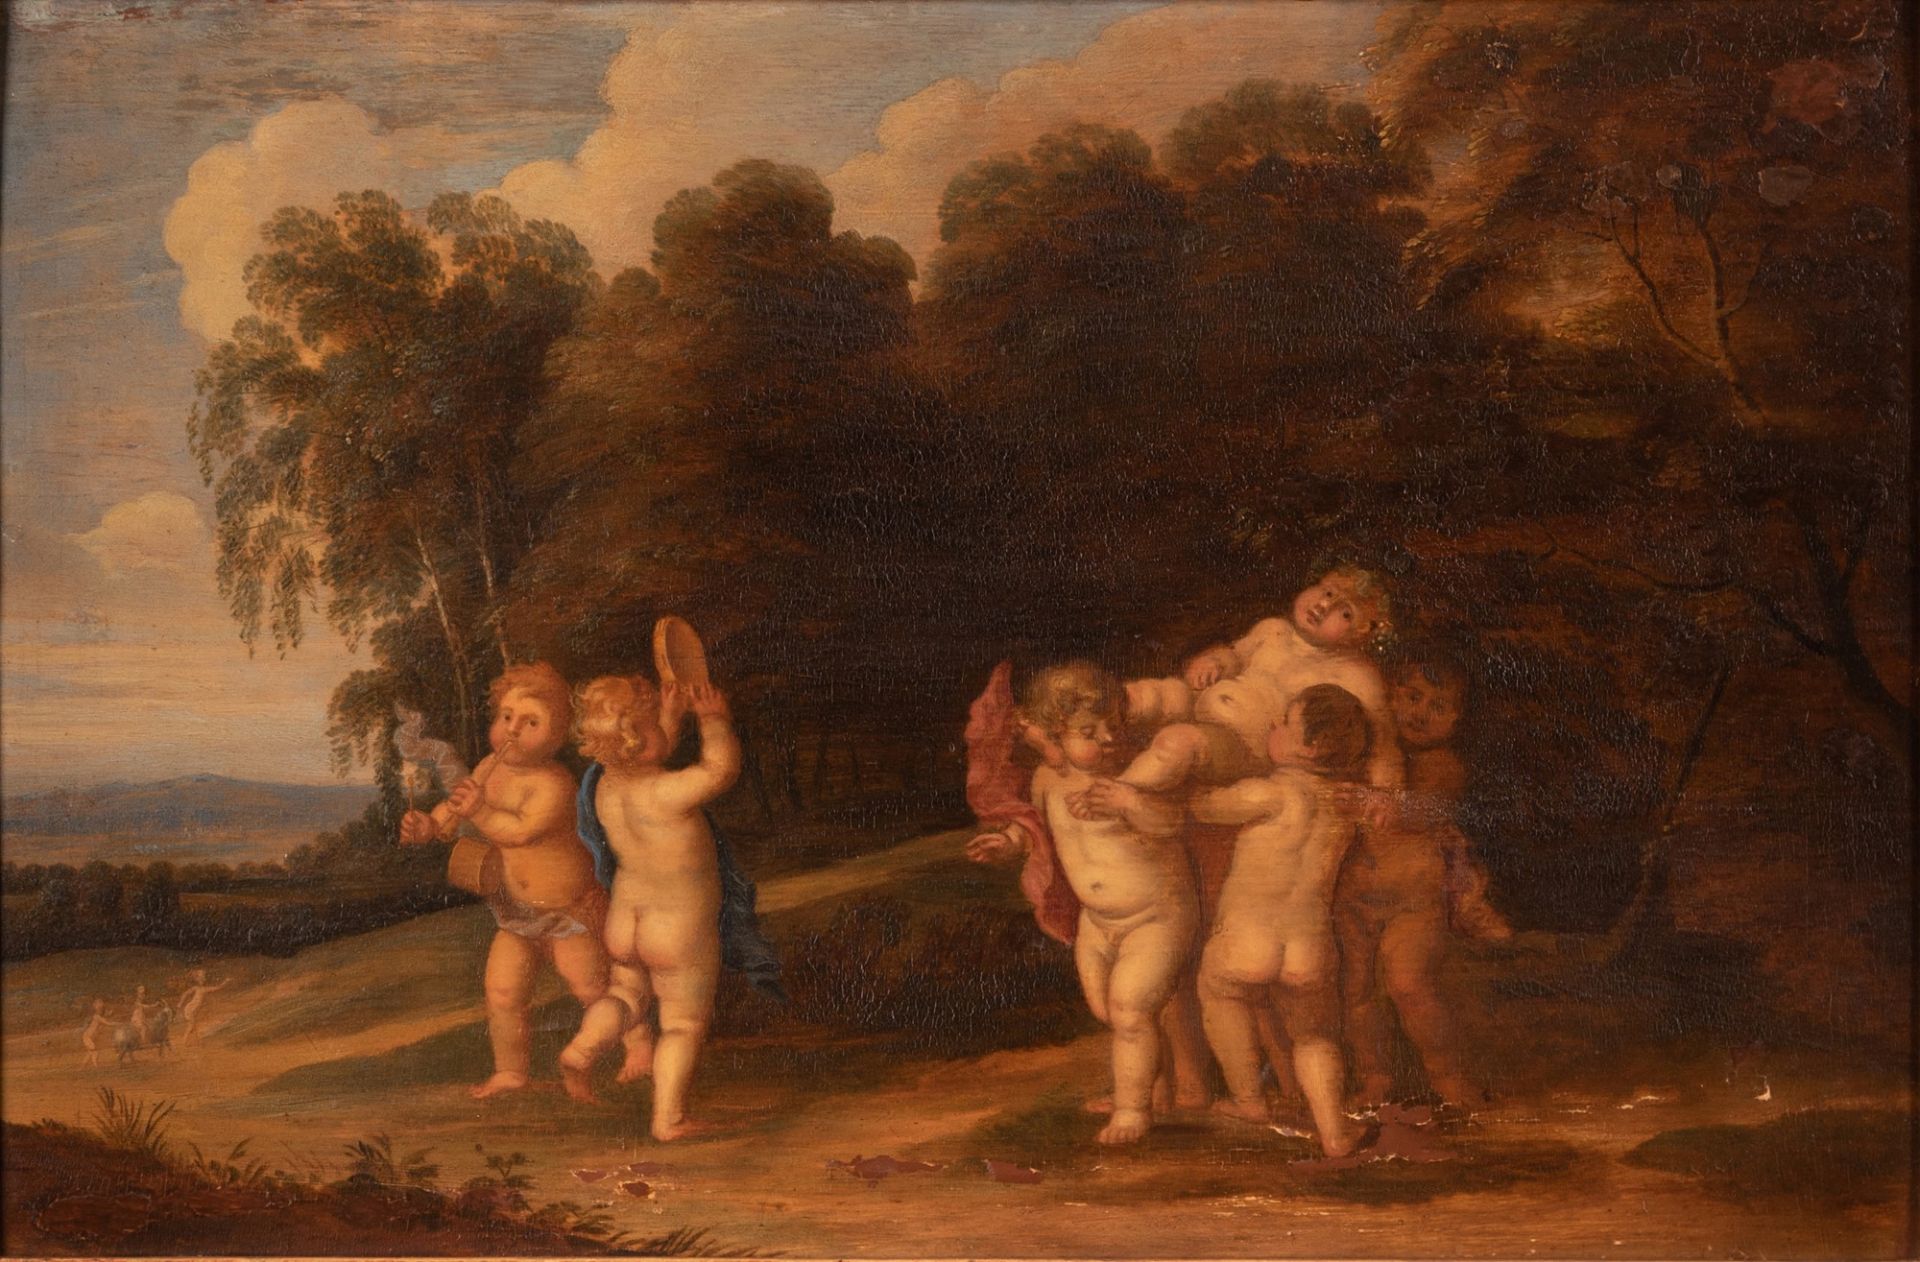 Drunken Bacchino with Puttos in a landscape  end of XVIII century